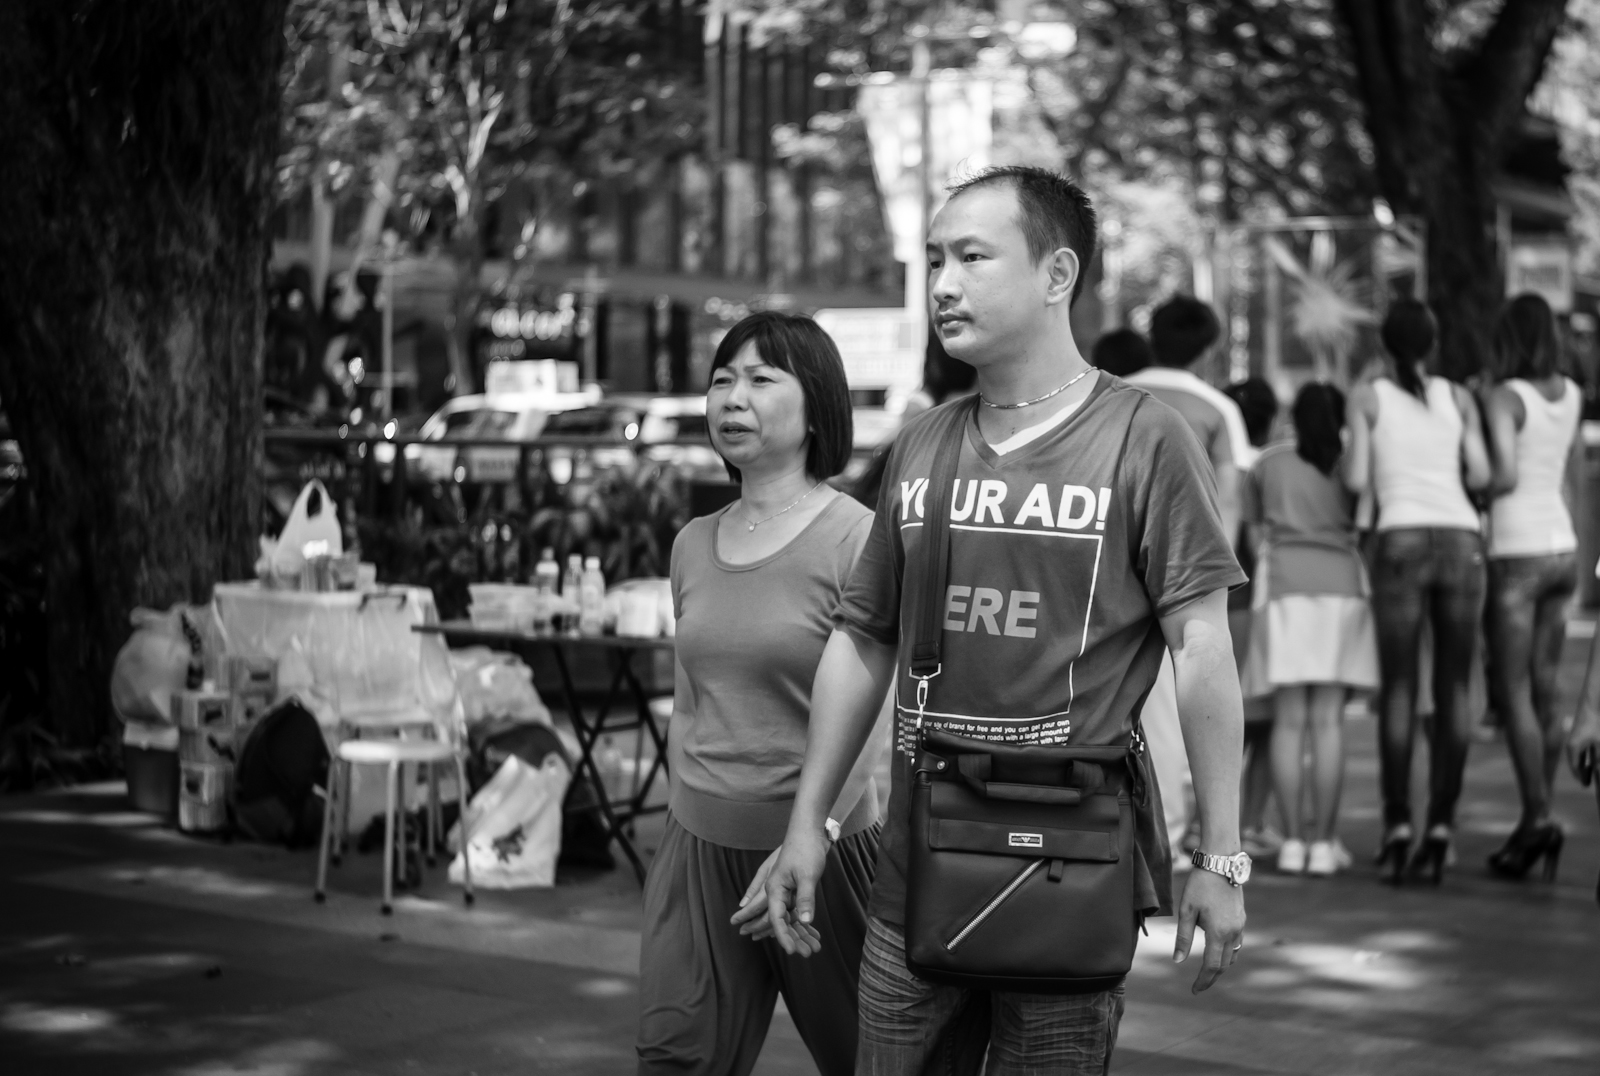 Street photography - man wearing a t-shirt that days 